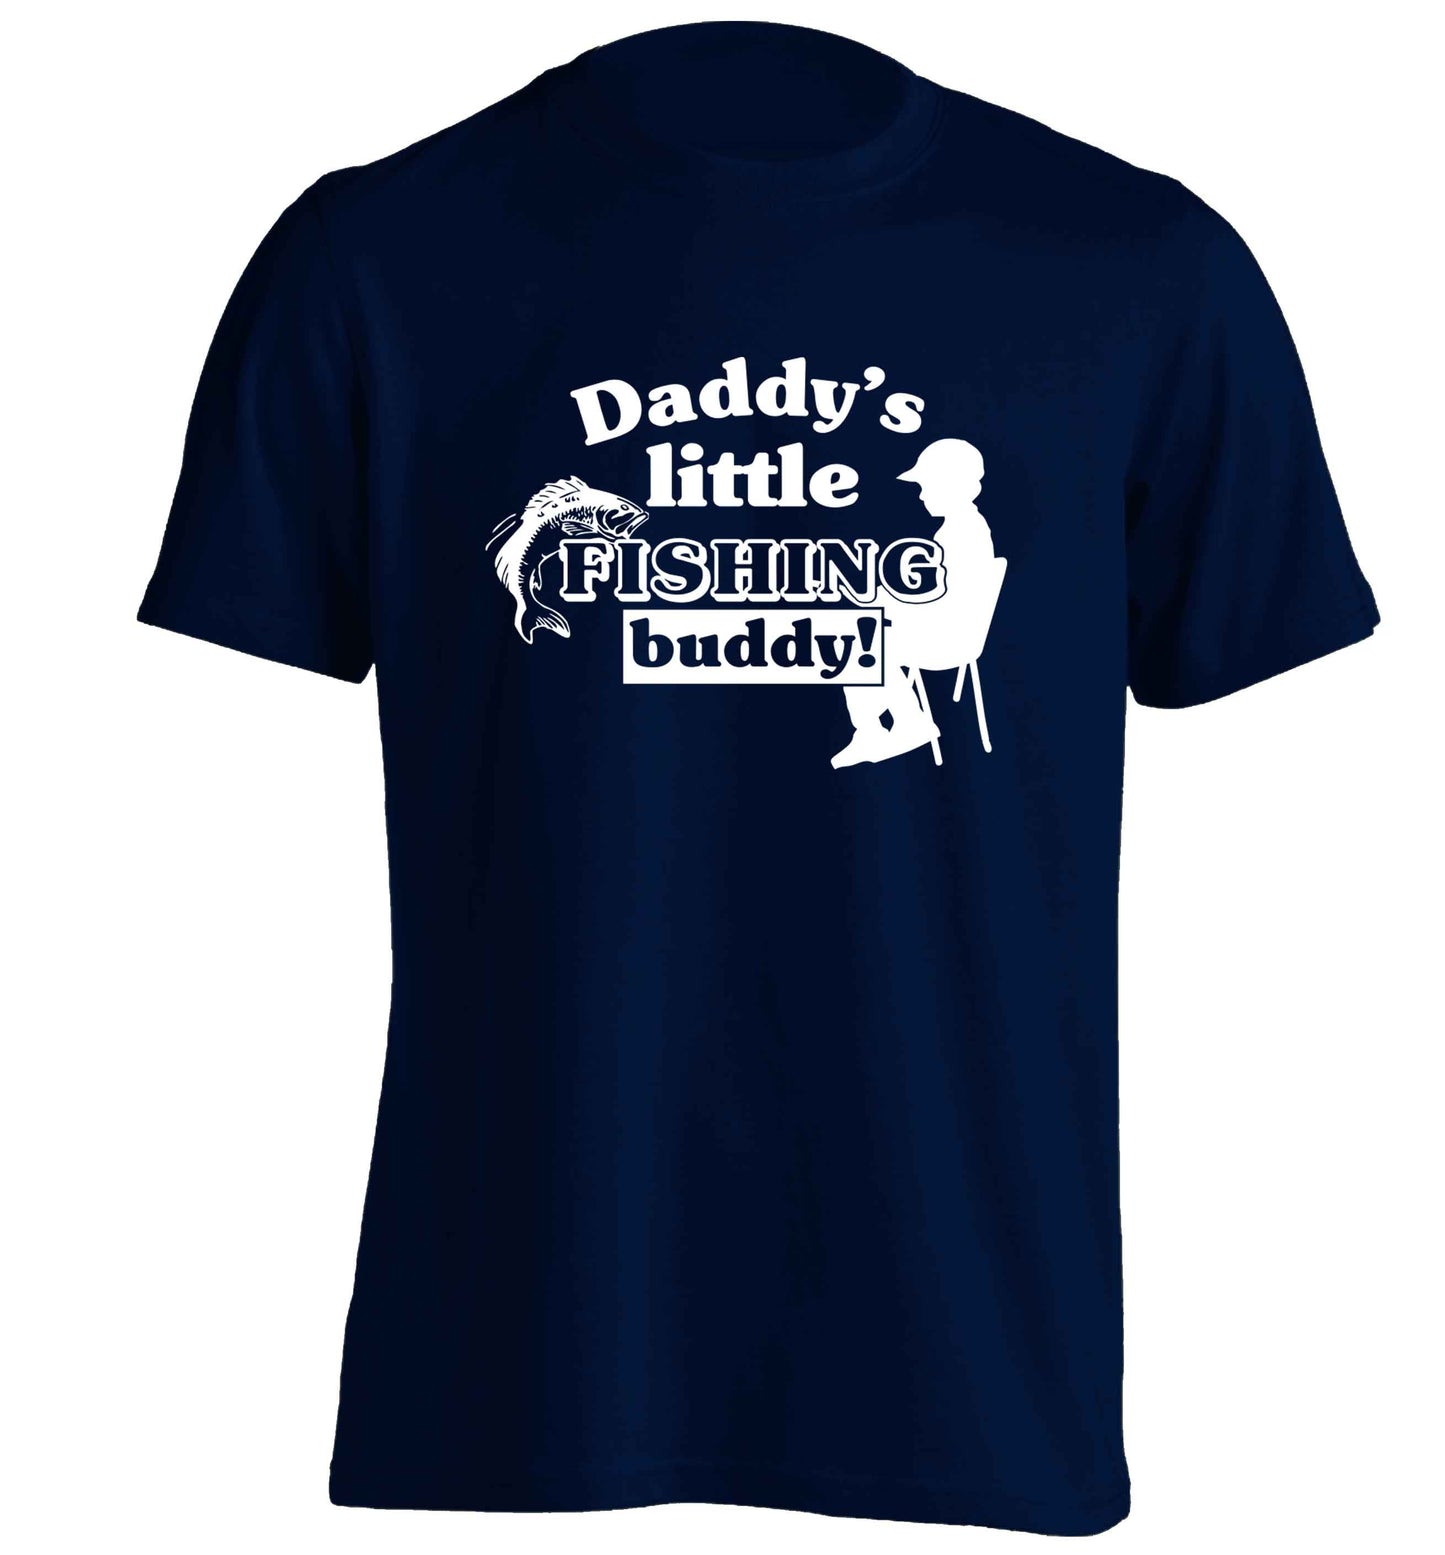 Daddy's little fishing buddy adults unisex navy Tshirt 2XL